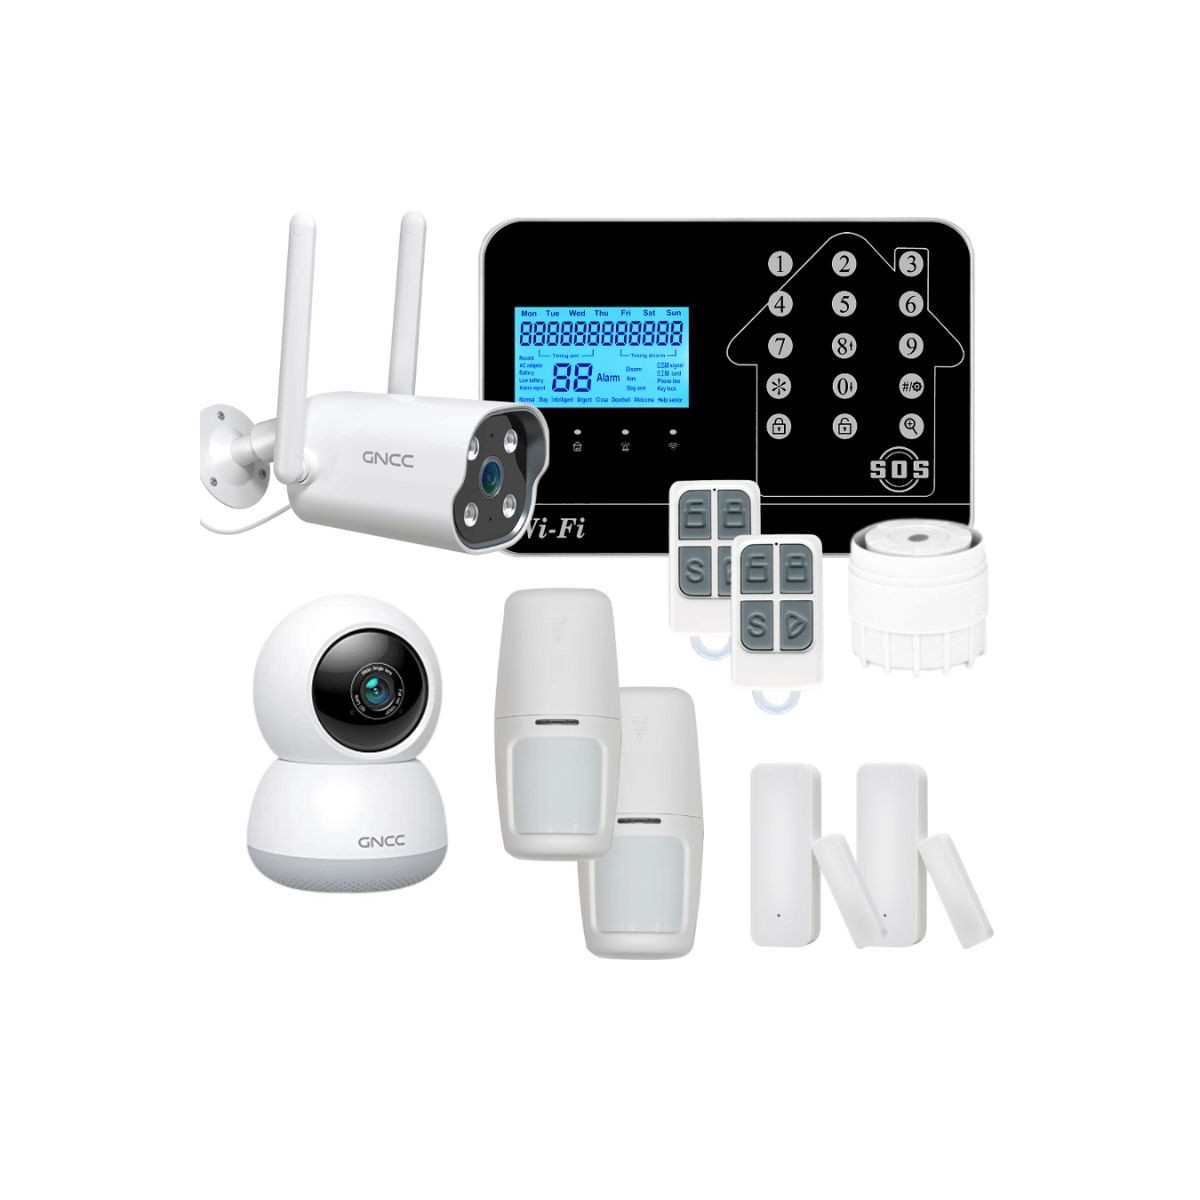 Kit de Alarma para casa conectada inalámbrica WiFi y gsm e y 2  cámaras WiFi - Lifebox - KIT11